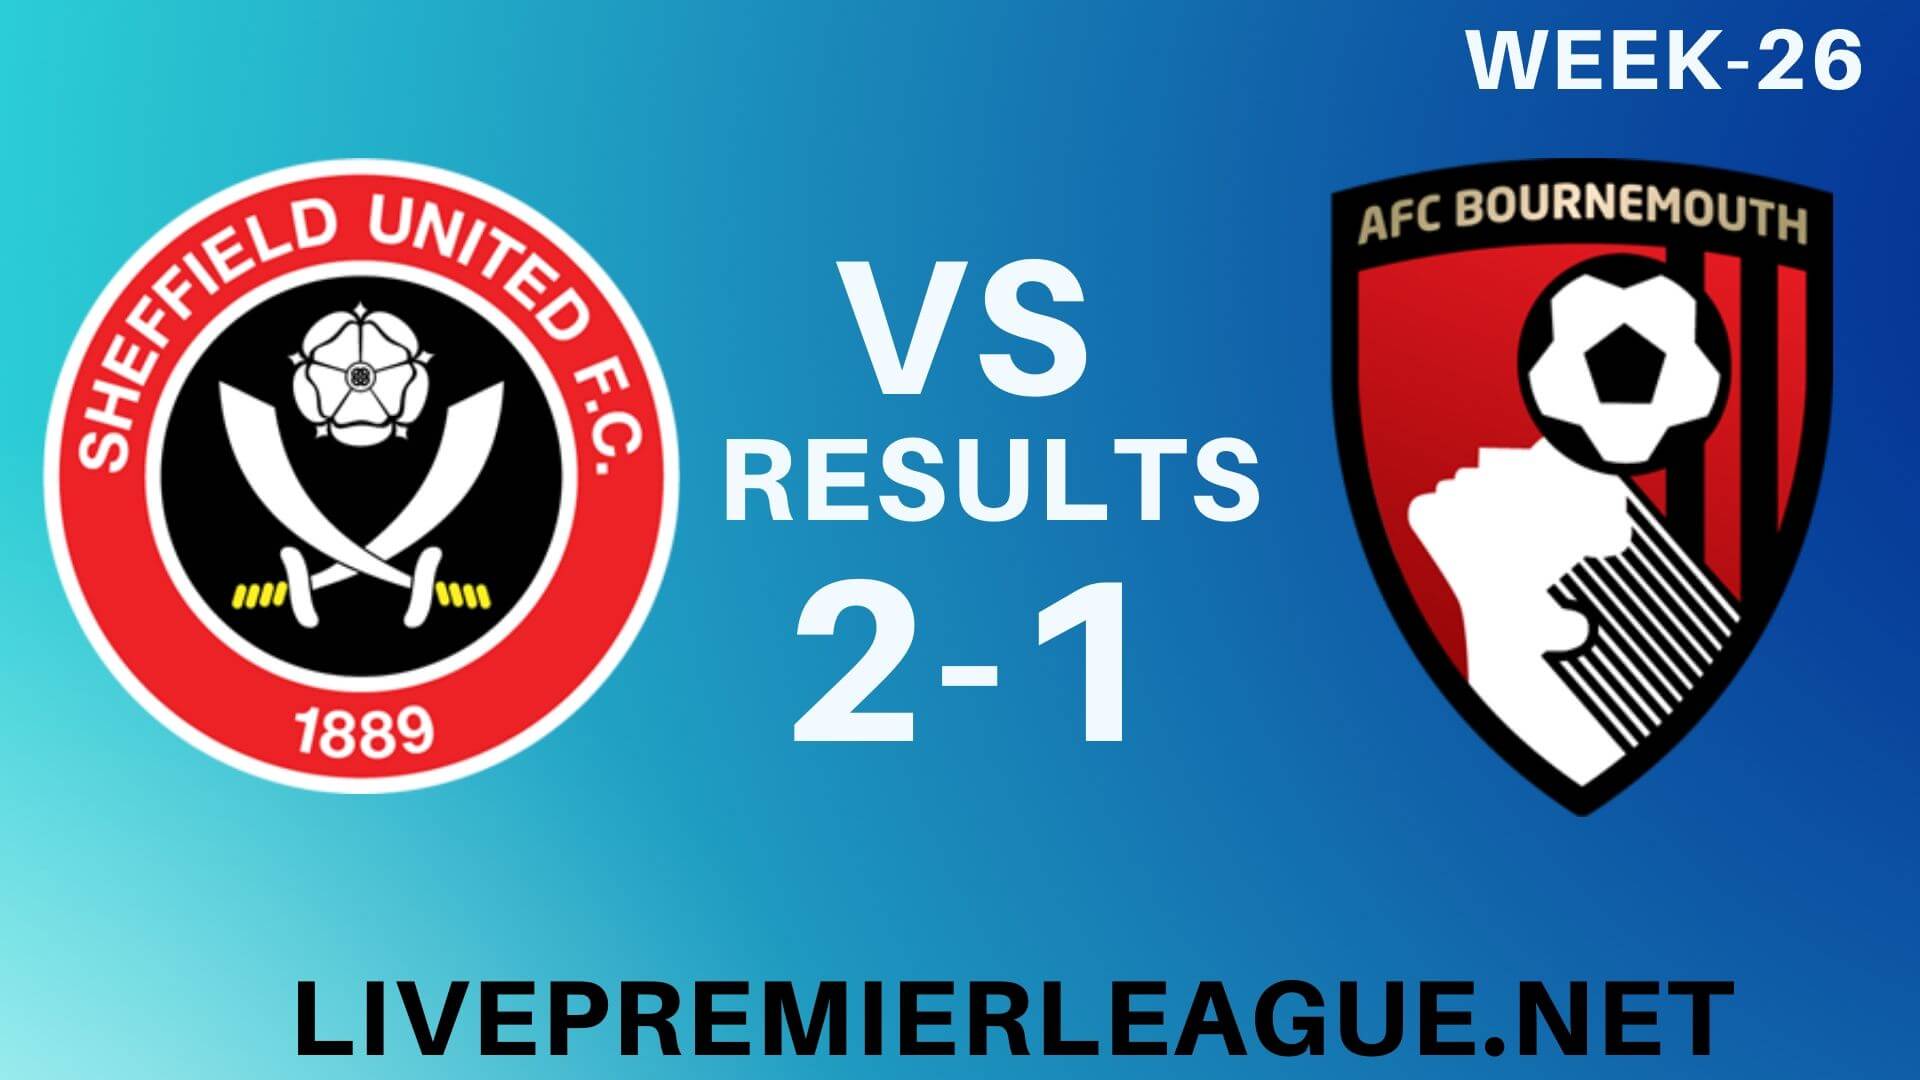 Sheffield United Vs AFC Bournemouth | Week 26 Result 2020